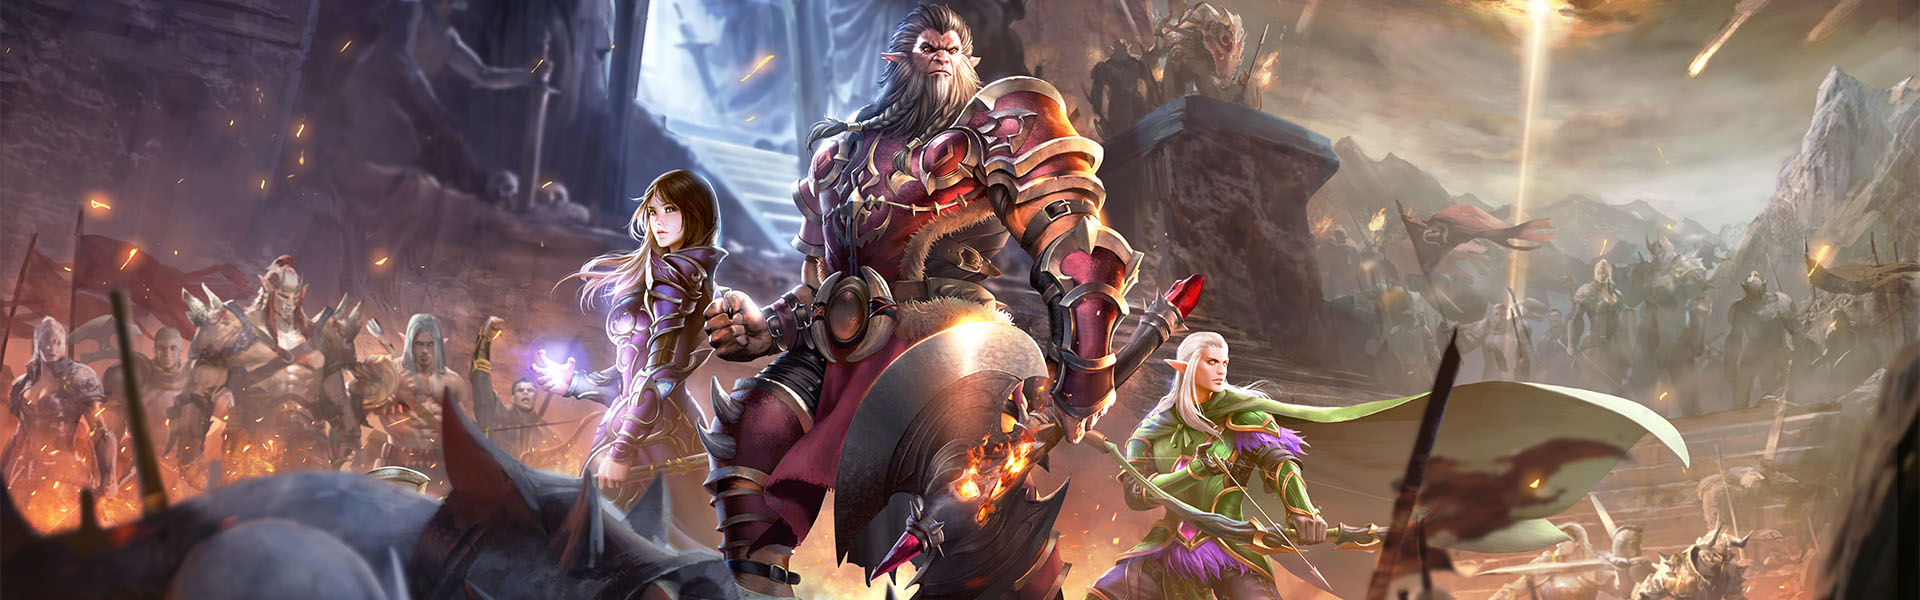 NetEase Games Debuts Crusaders of Light 14